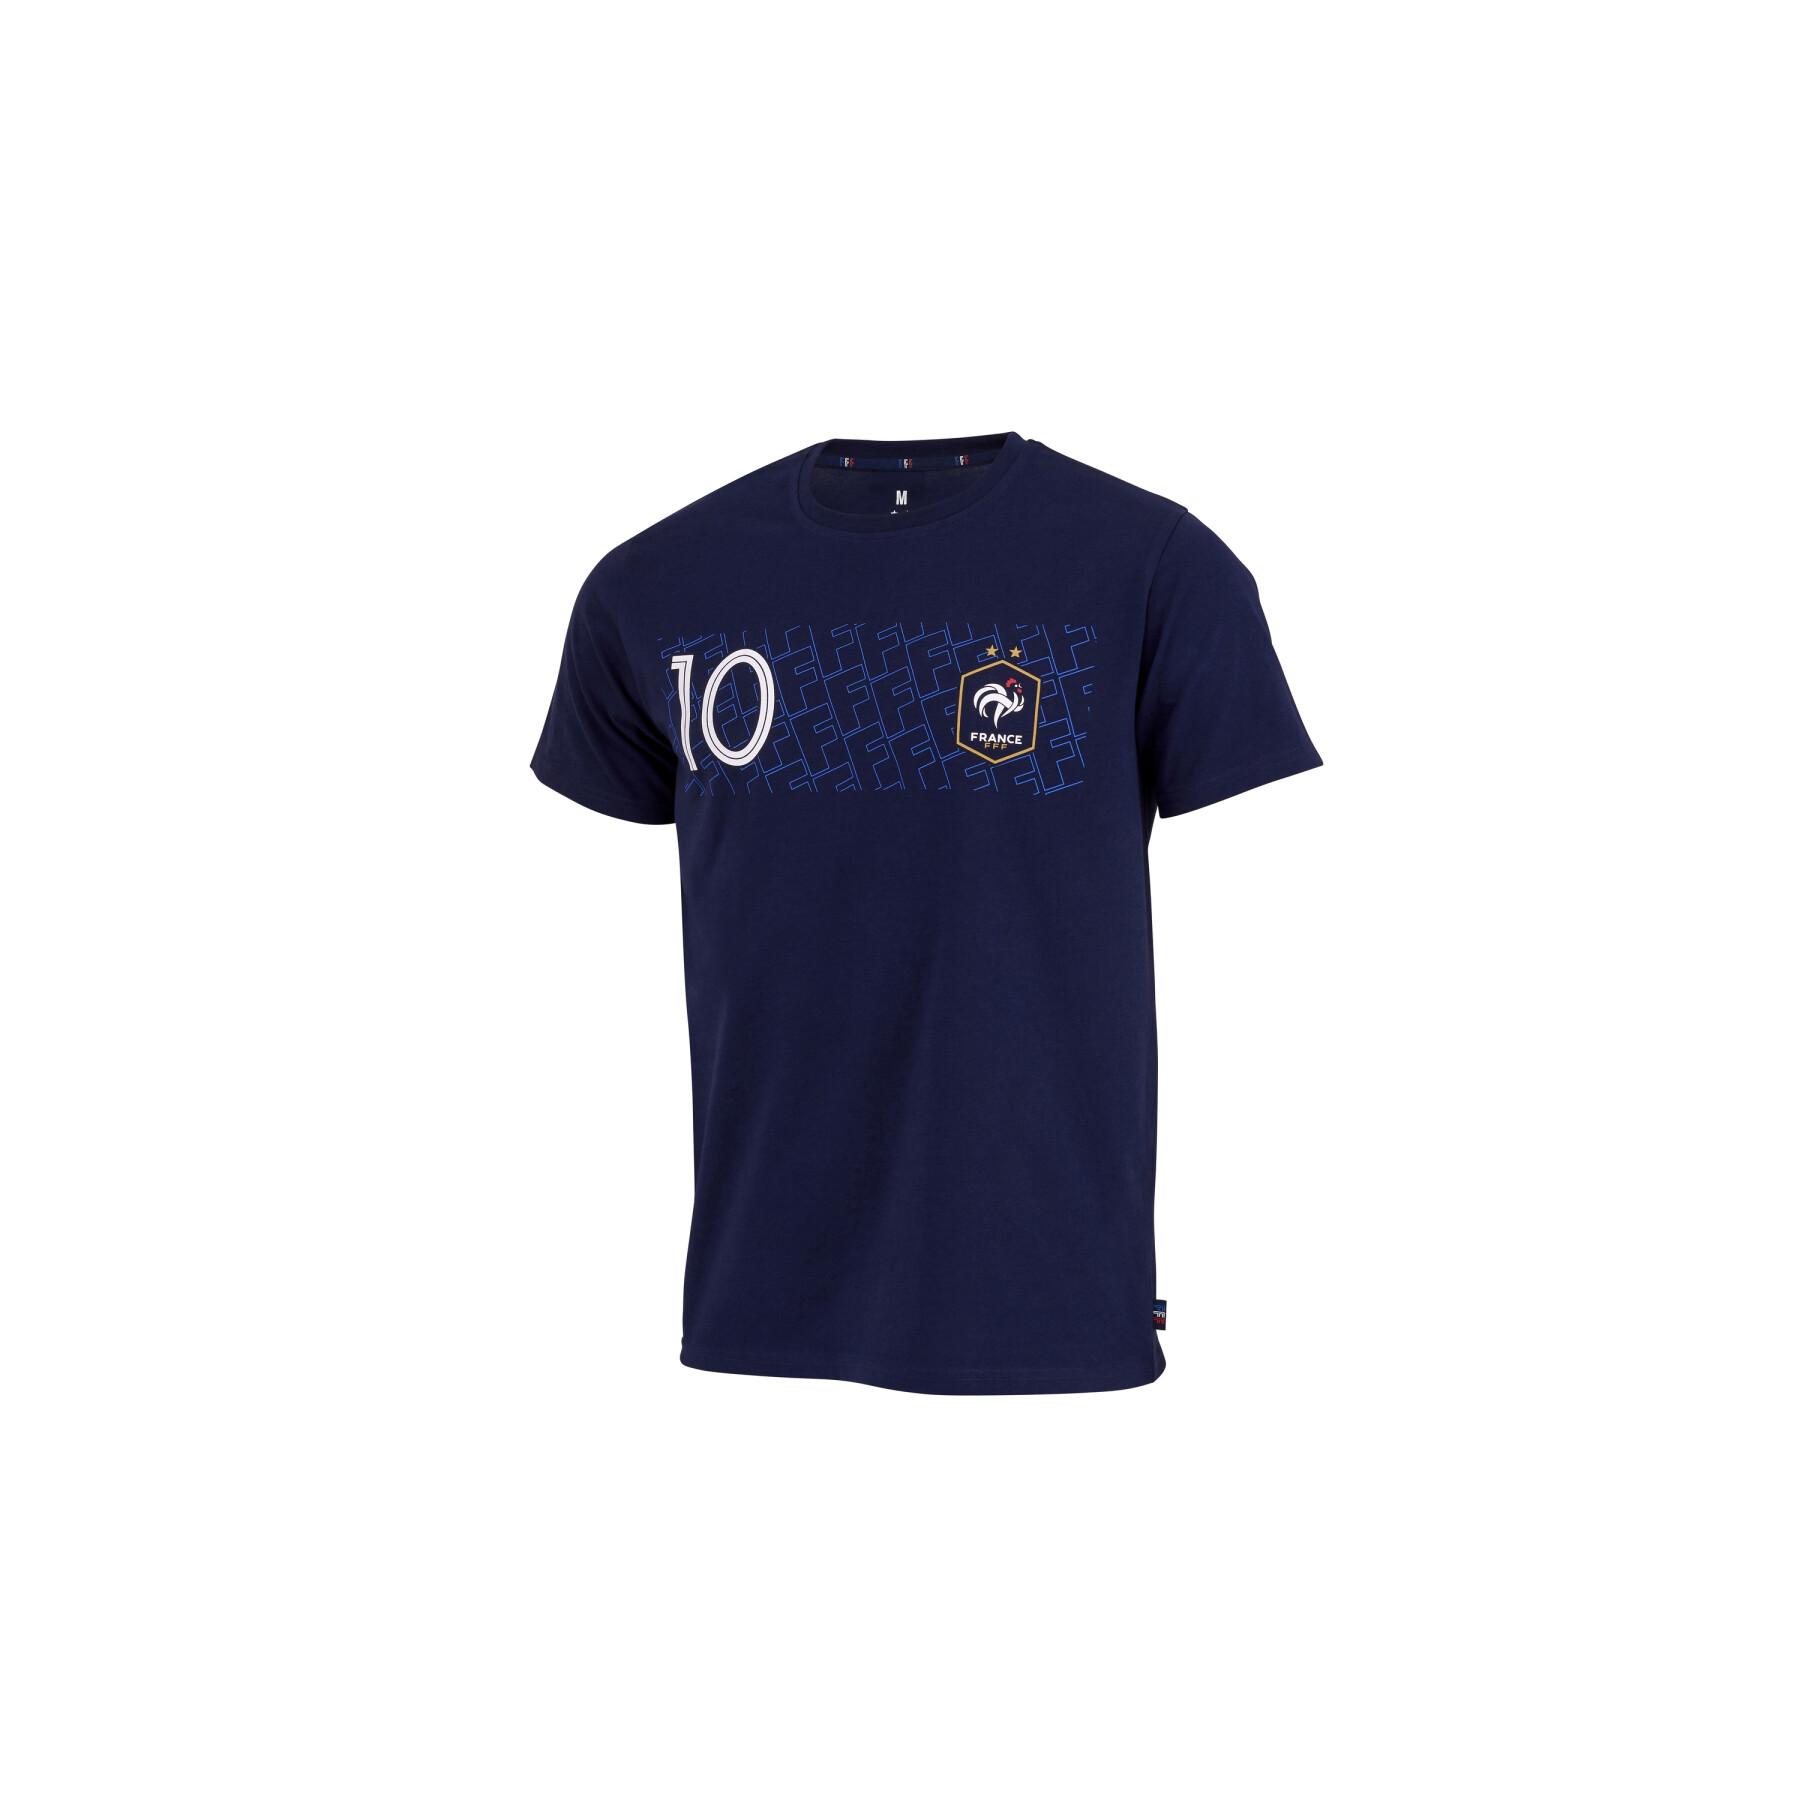 T-shirt Frankreich Spieler Mbappe N°10